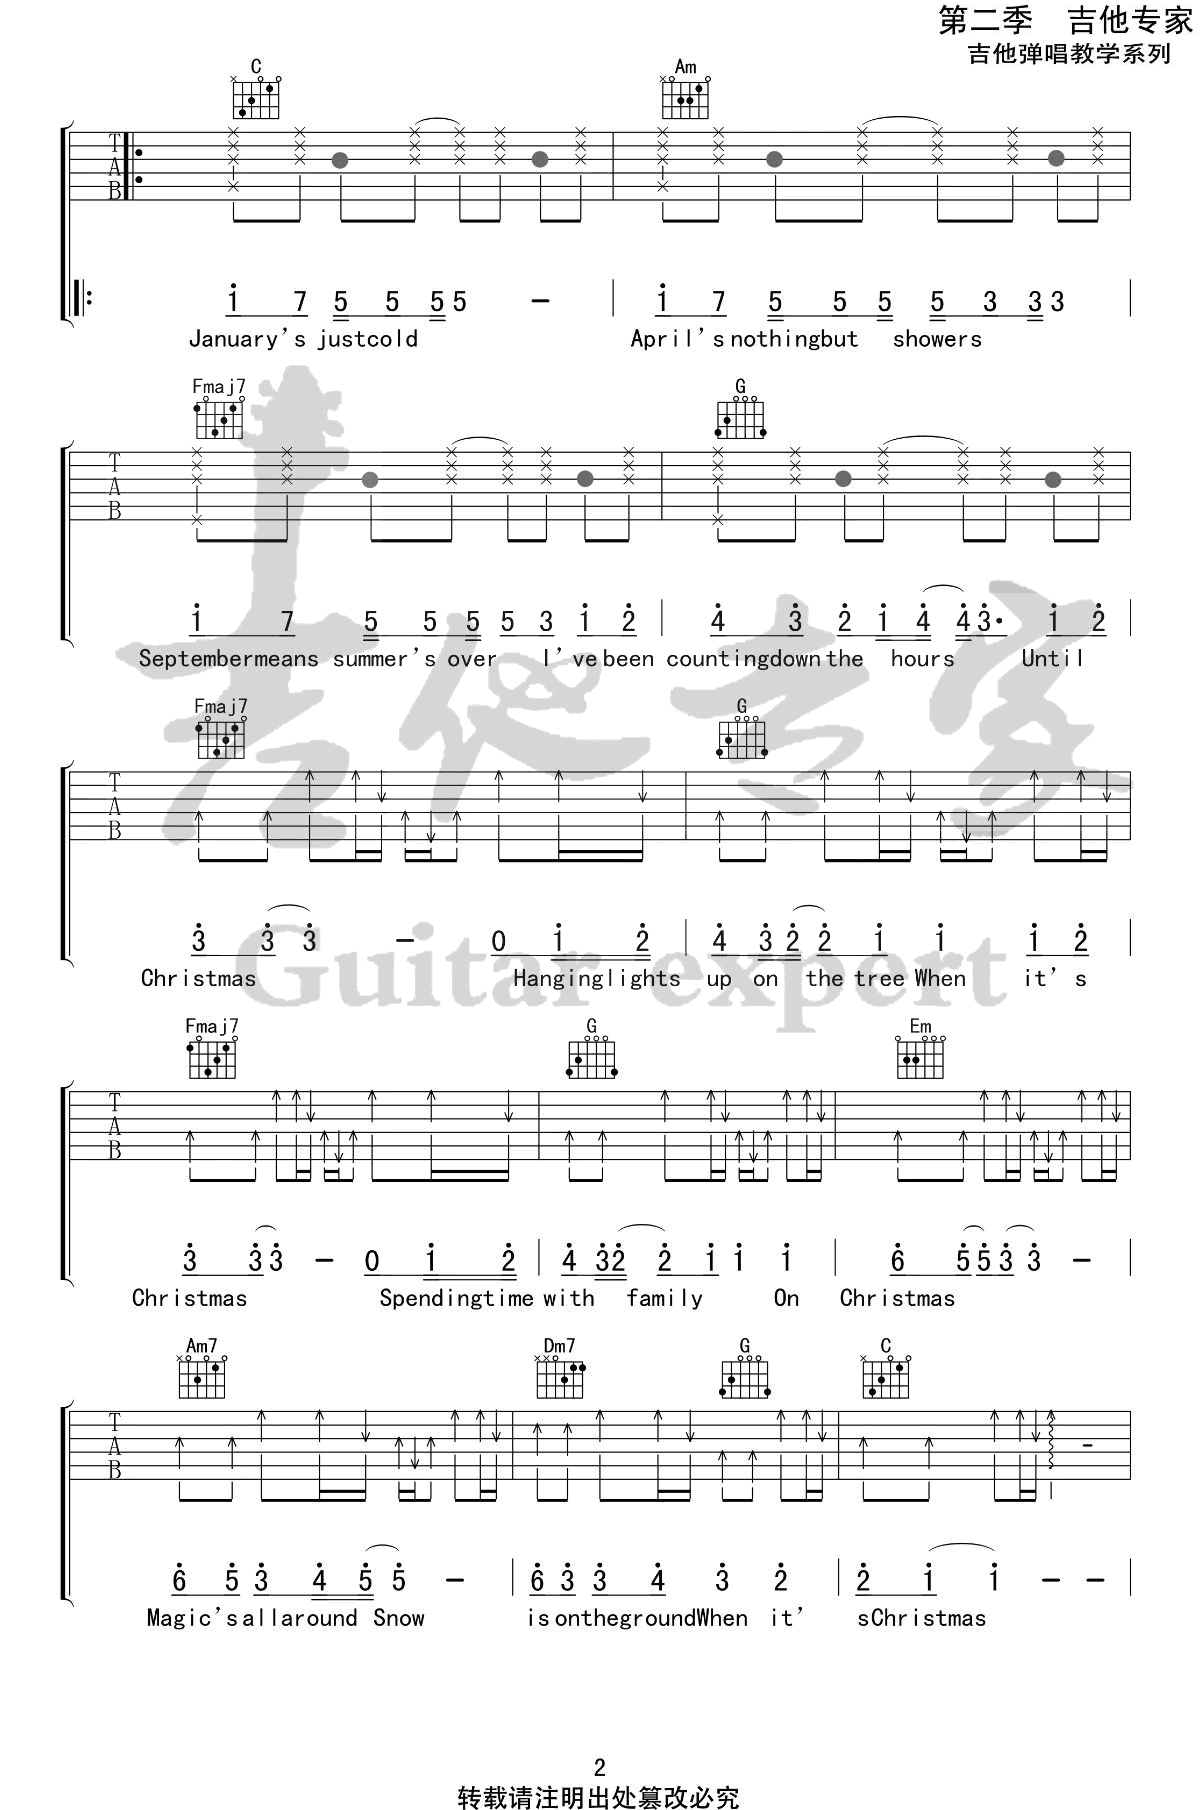 When It’s Christmas吉他谱-张艺兴-C调-弹唱六线谱插图1